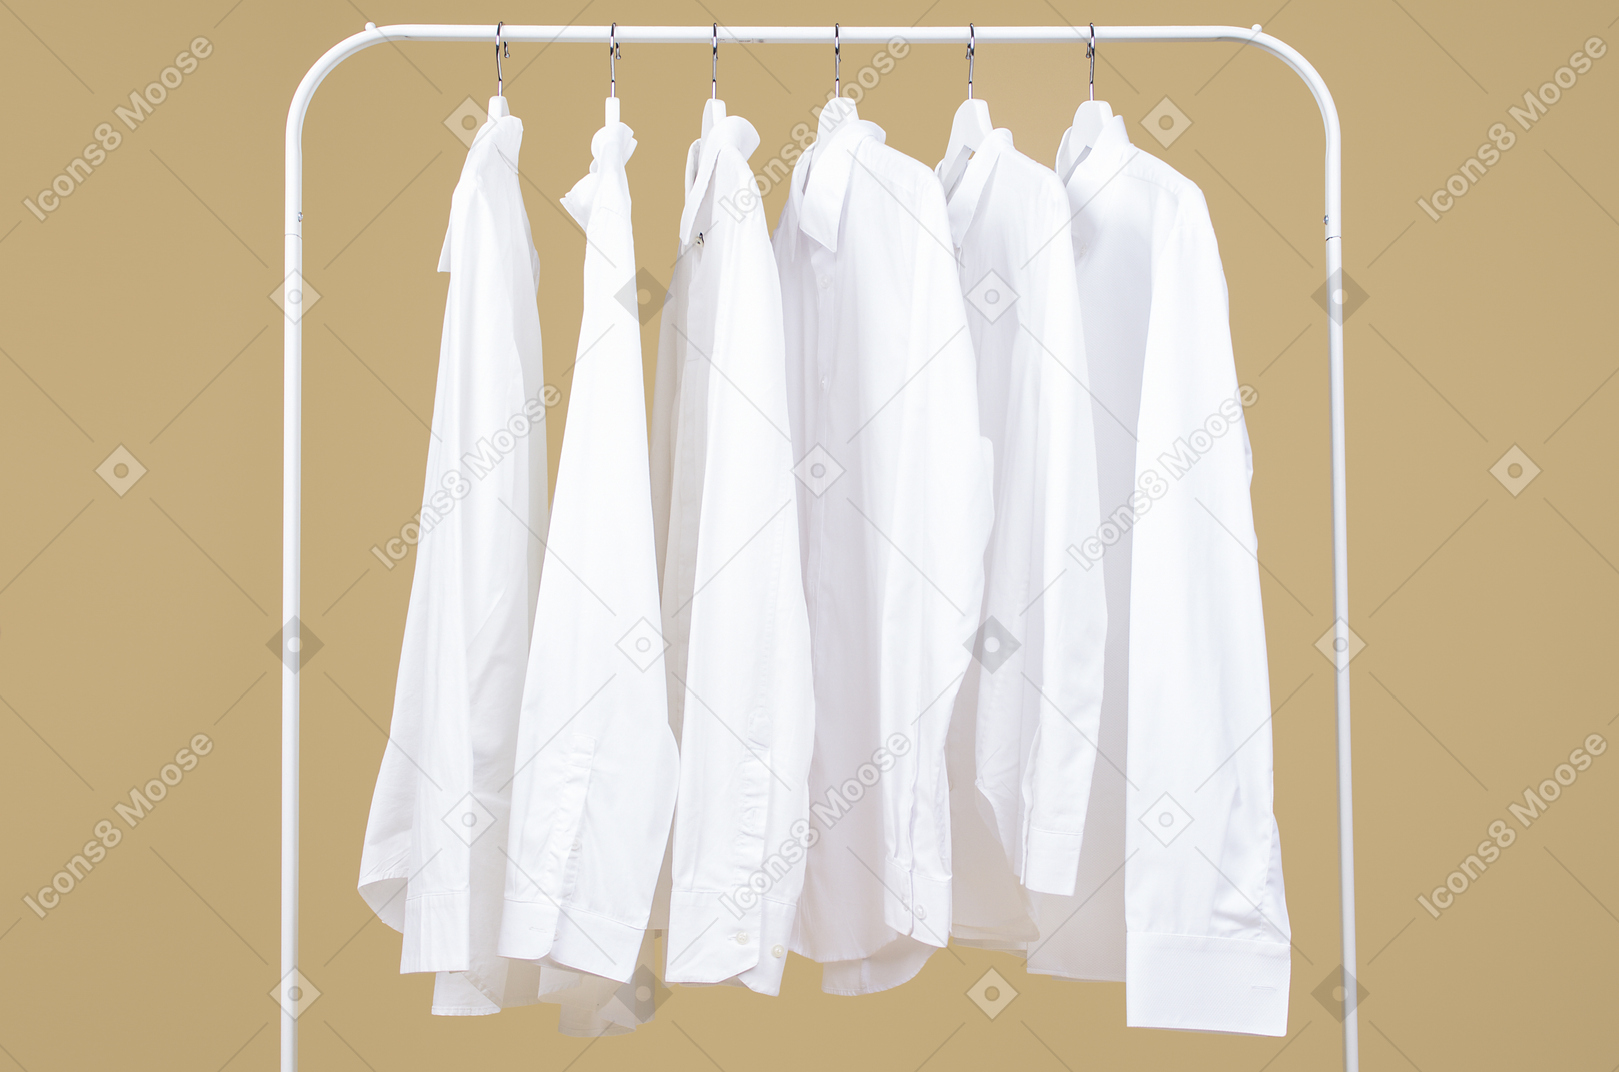 Белые рубашки на вешалках на ранге